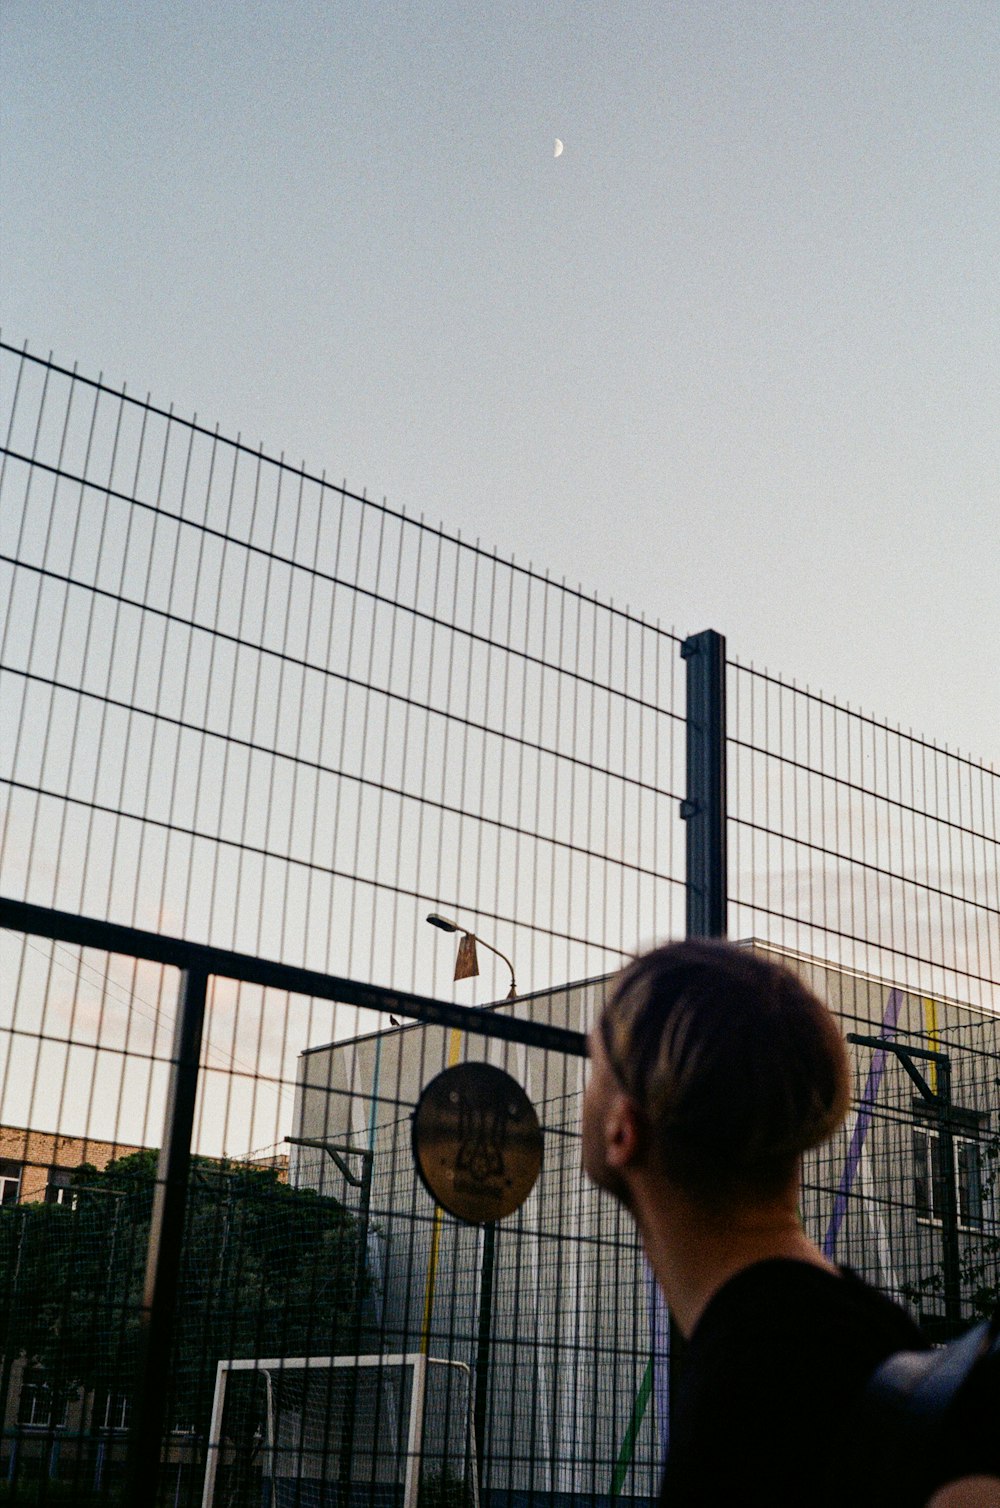 woman in black shirt standing near black metal fence during daytime